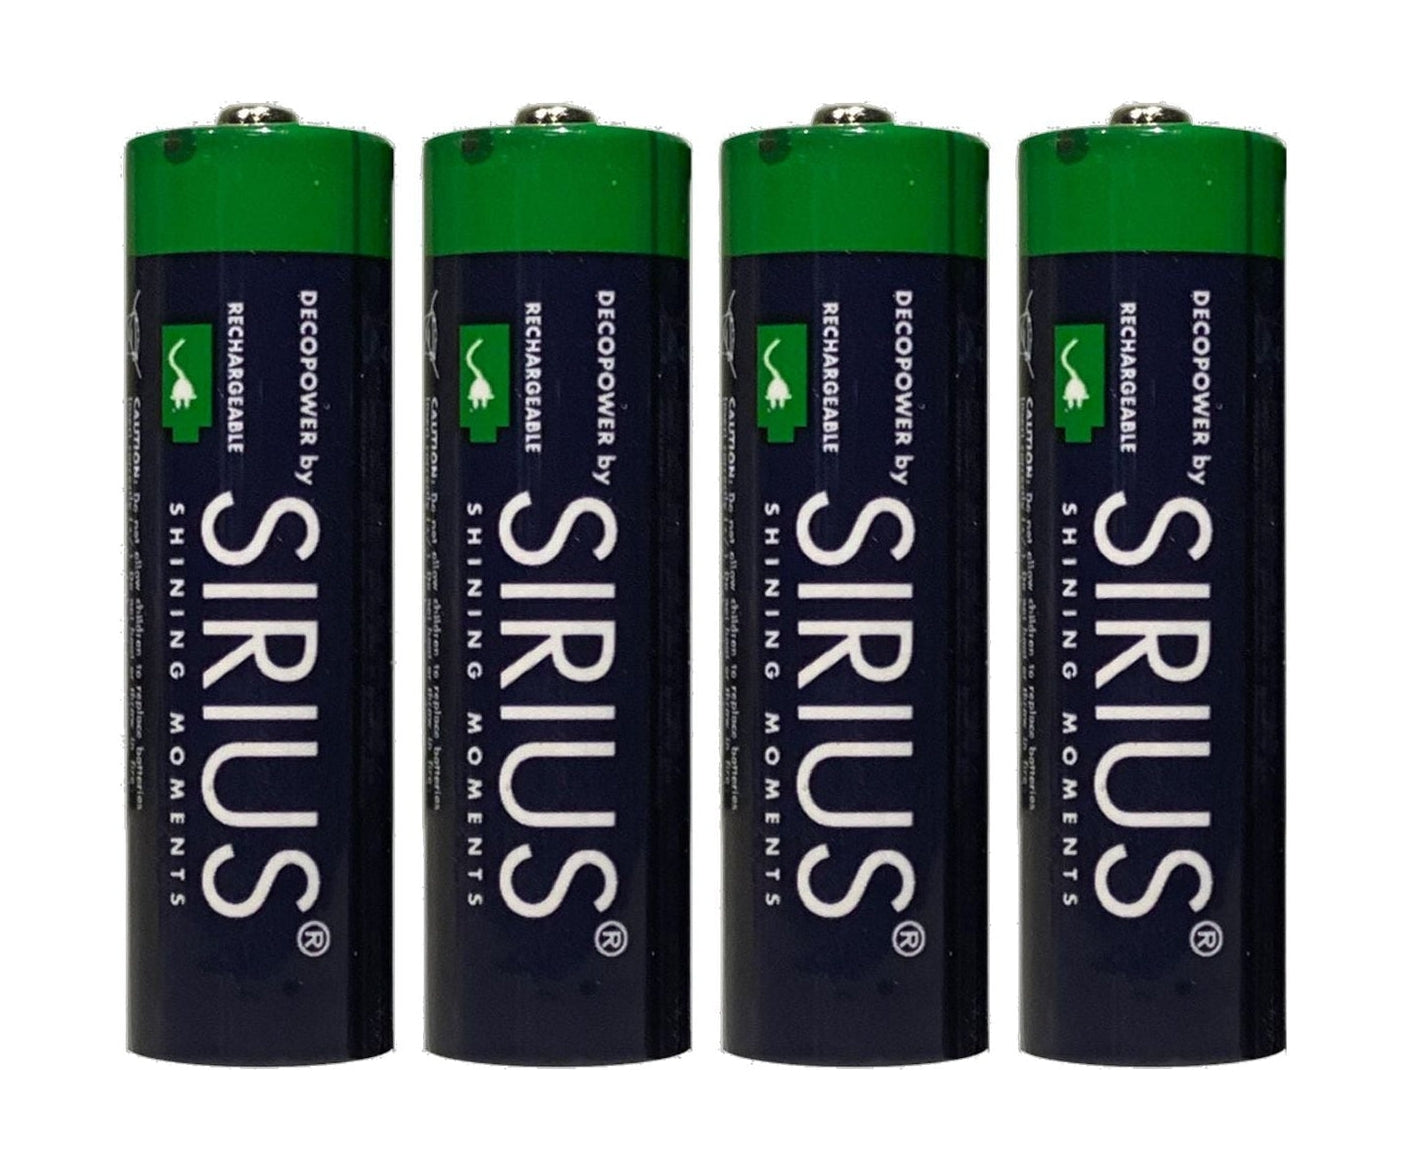 SIRIUS DECO POWER AA batterie ricaricabili, 4 pezzi set